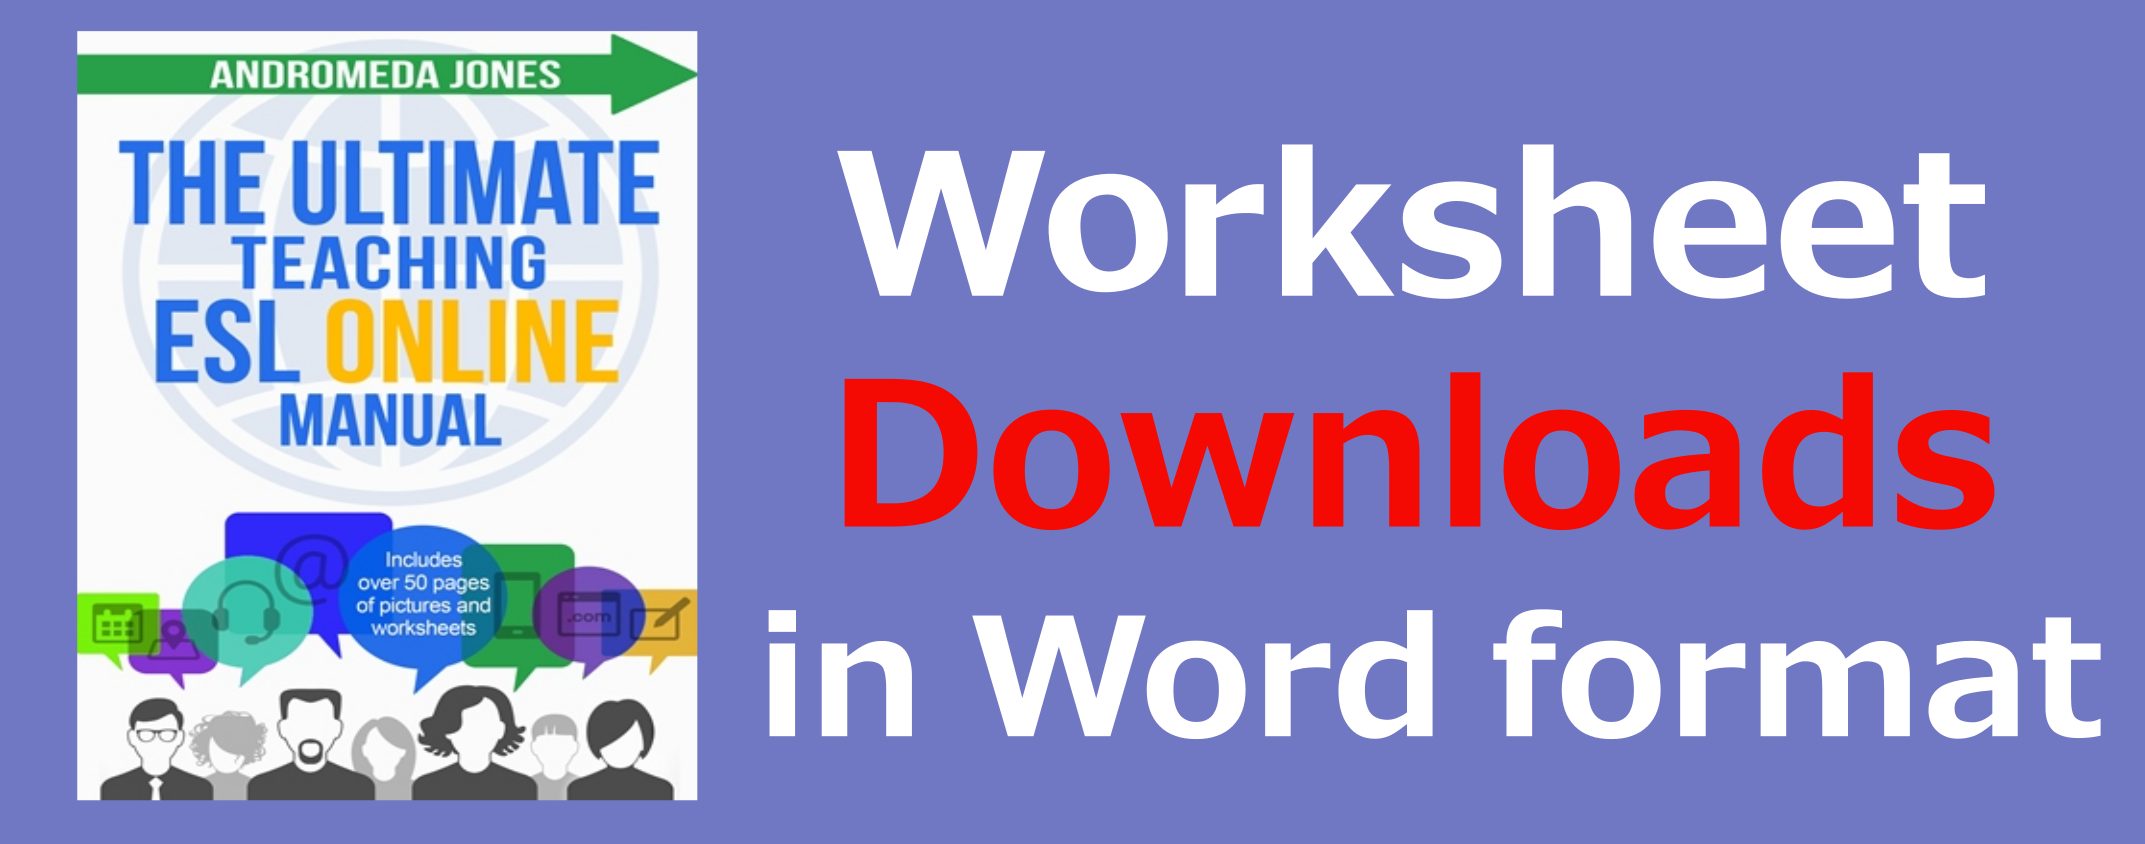 The Ultimate Esl Online Worksheets In Word Format - Ultimate Esl Teaching Manual (2145x844), Png Download